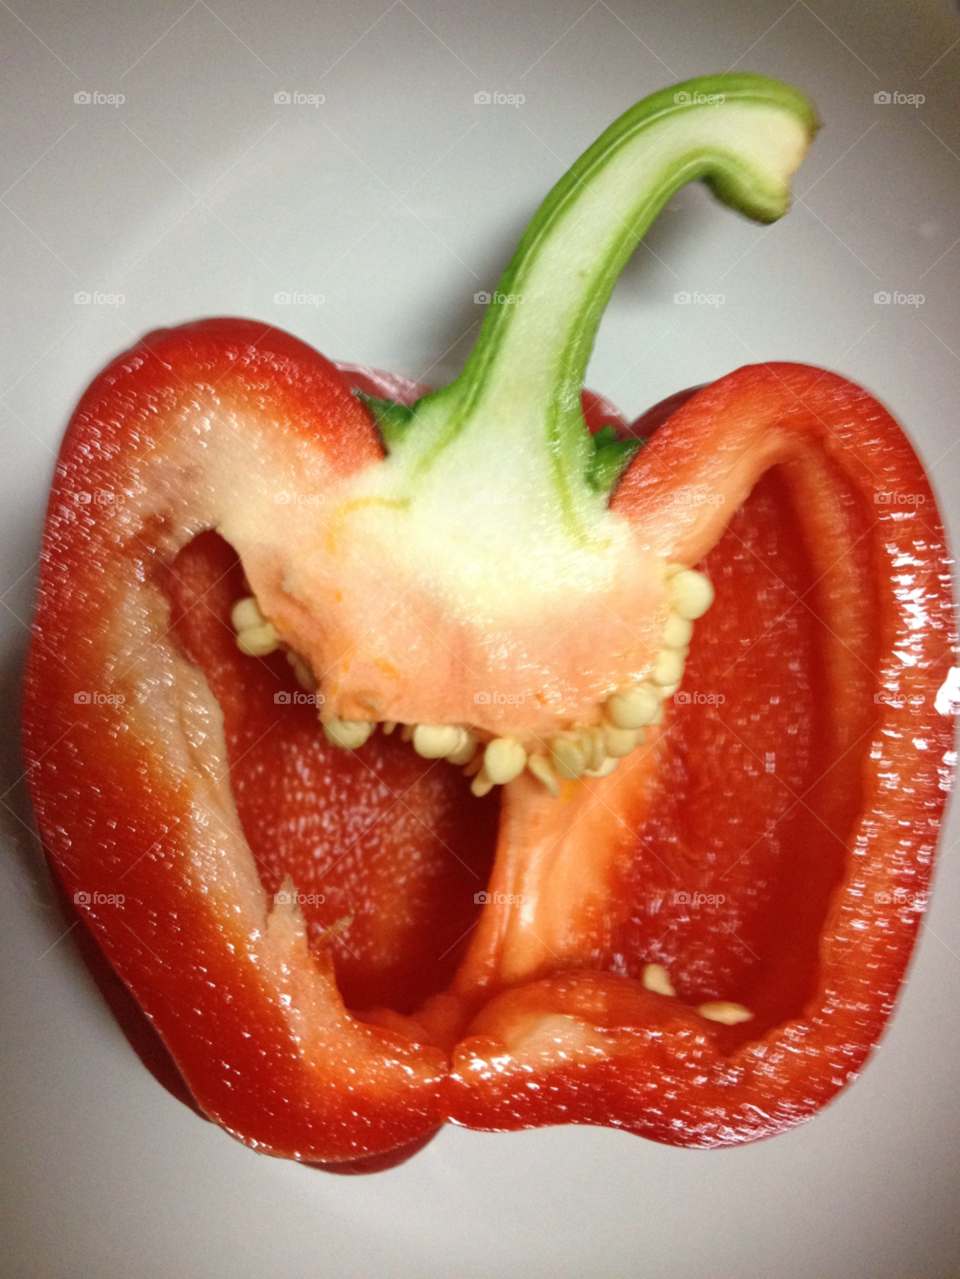 red food seeds pepper by hugo